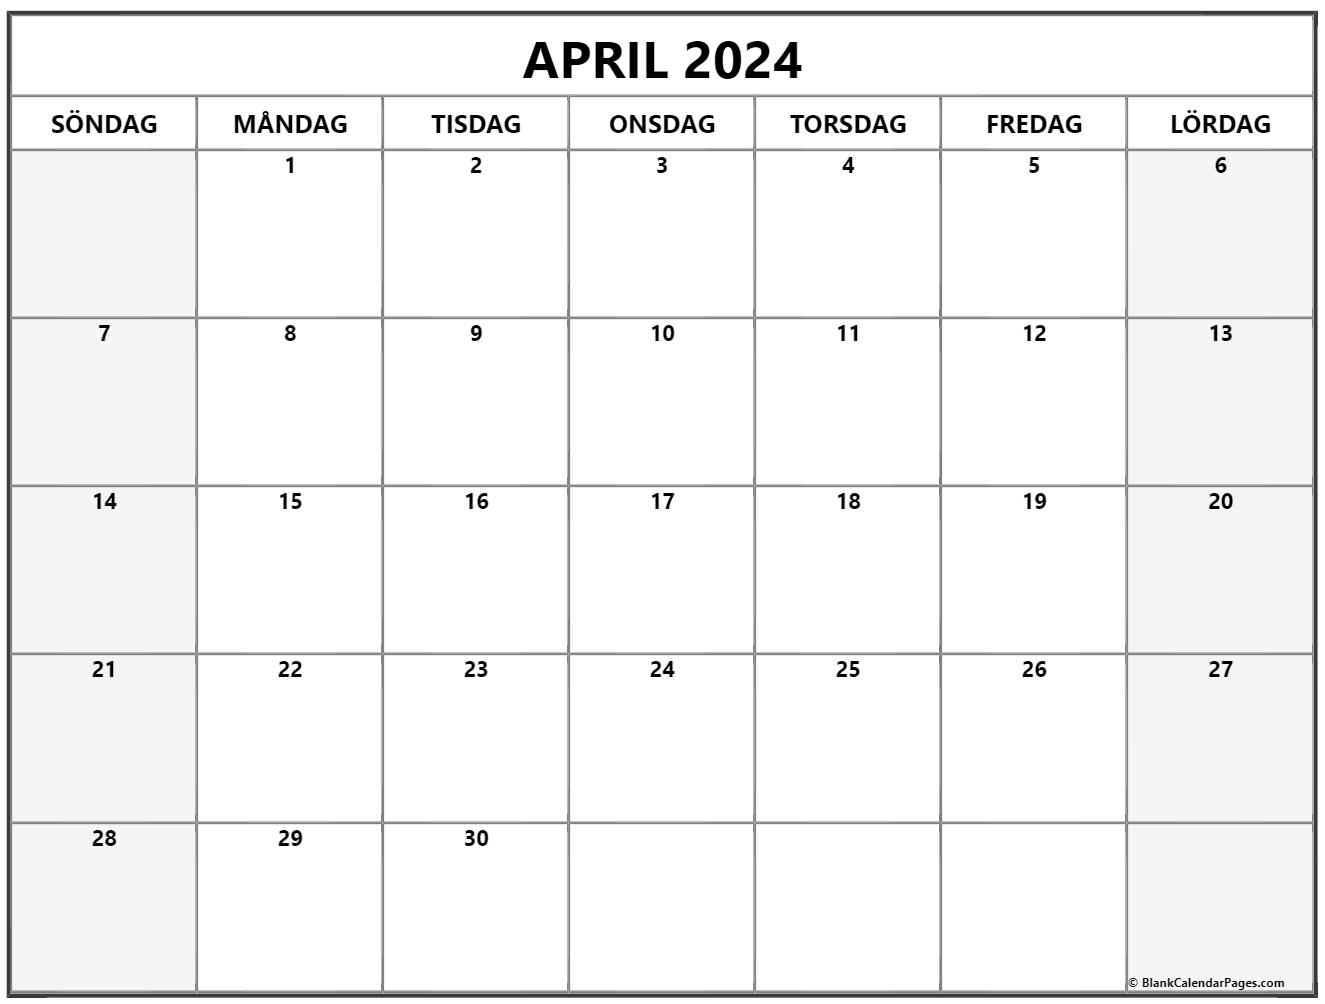 april 2021 kalender Svenska | Kalender april